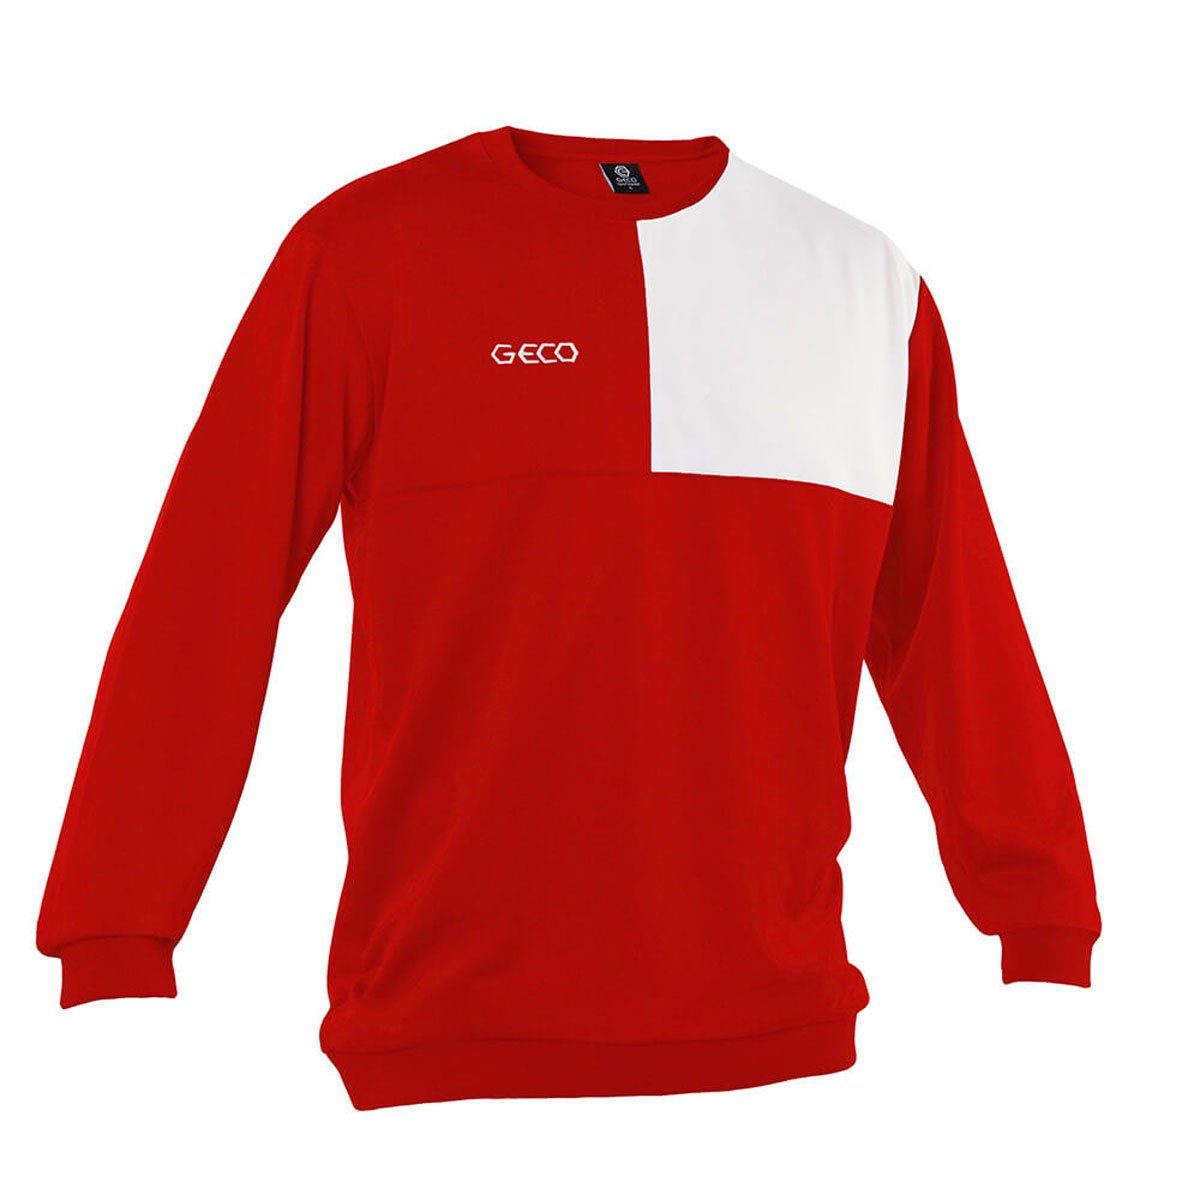 Geco zweifarbig Sweatshirt Sportswear Kusi Geco Sweatshirt Trainings rot Fußball